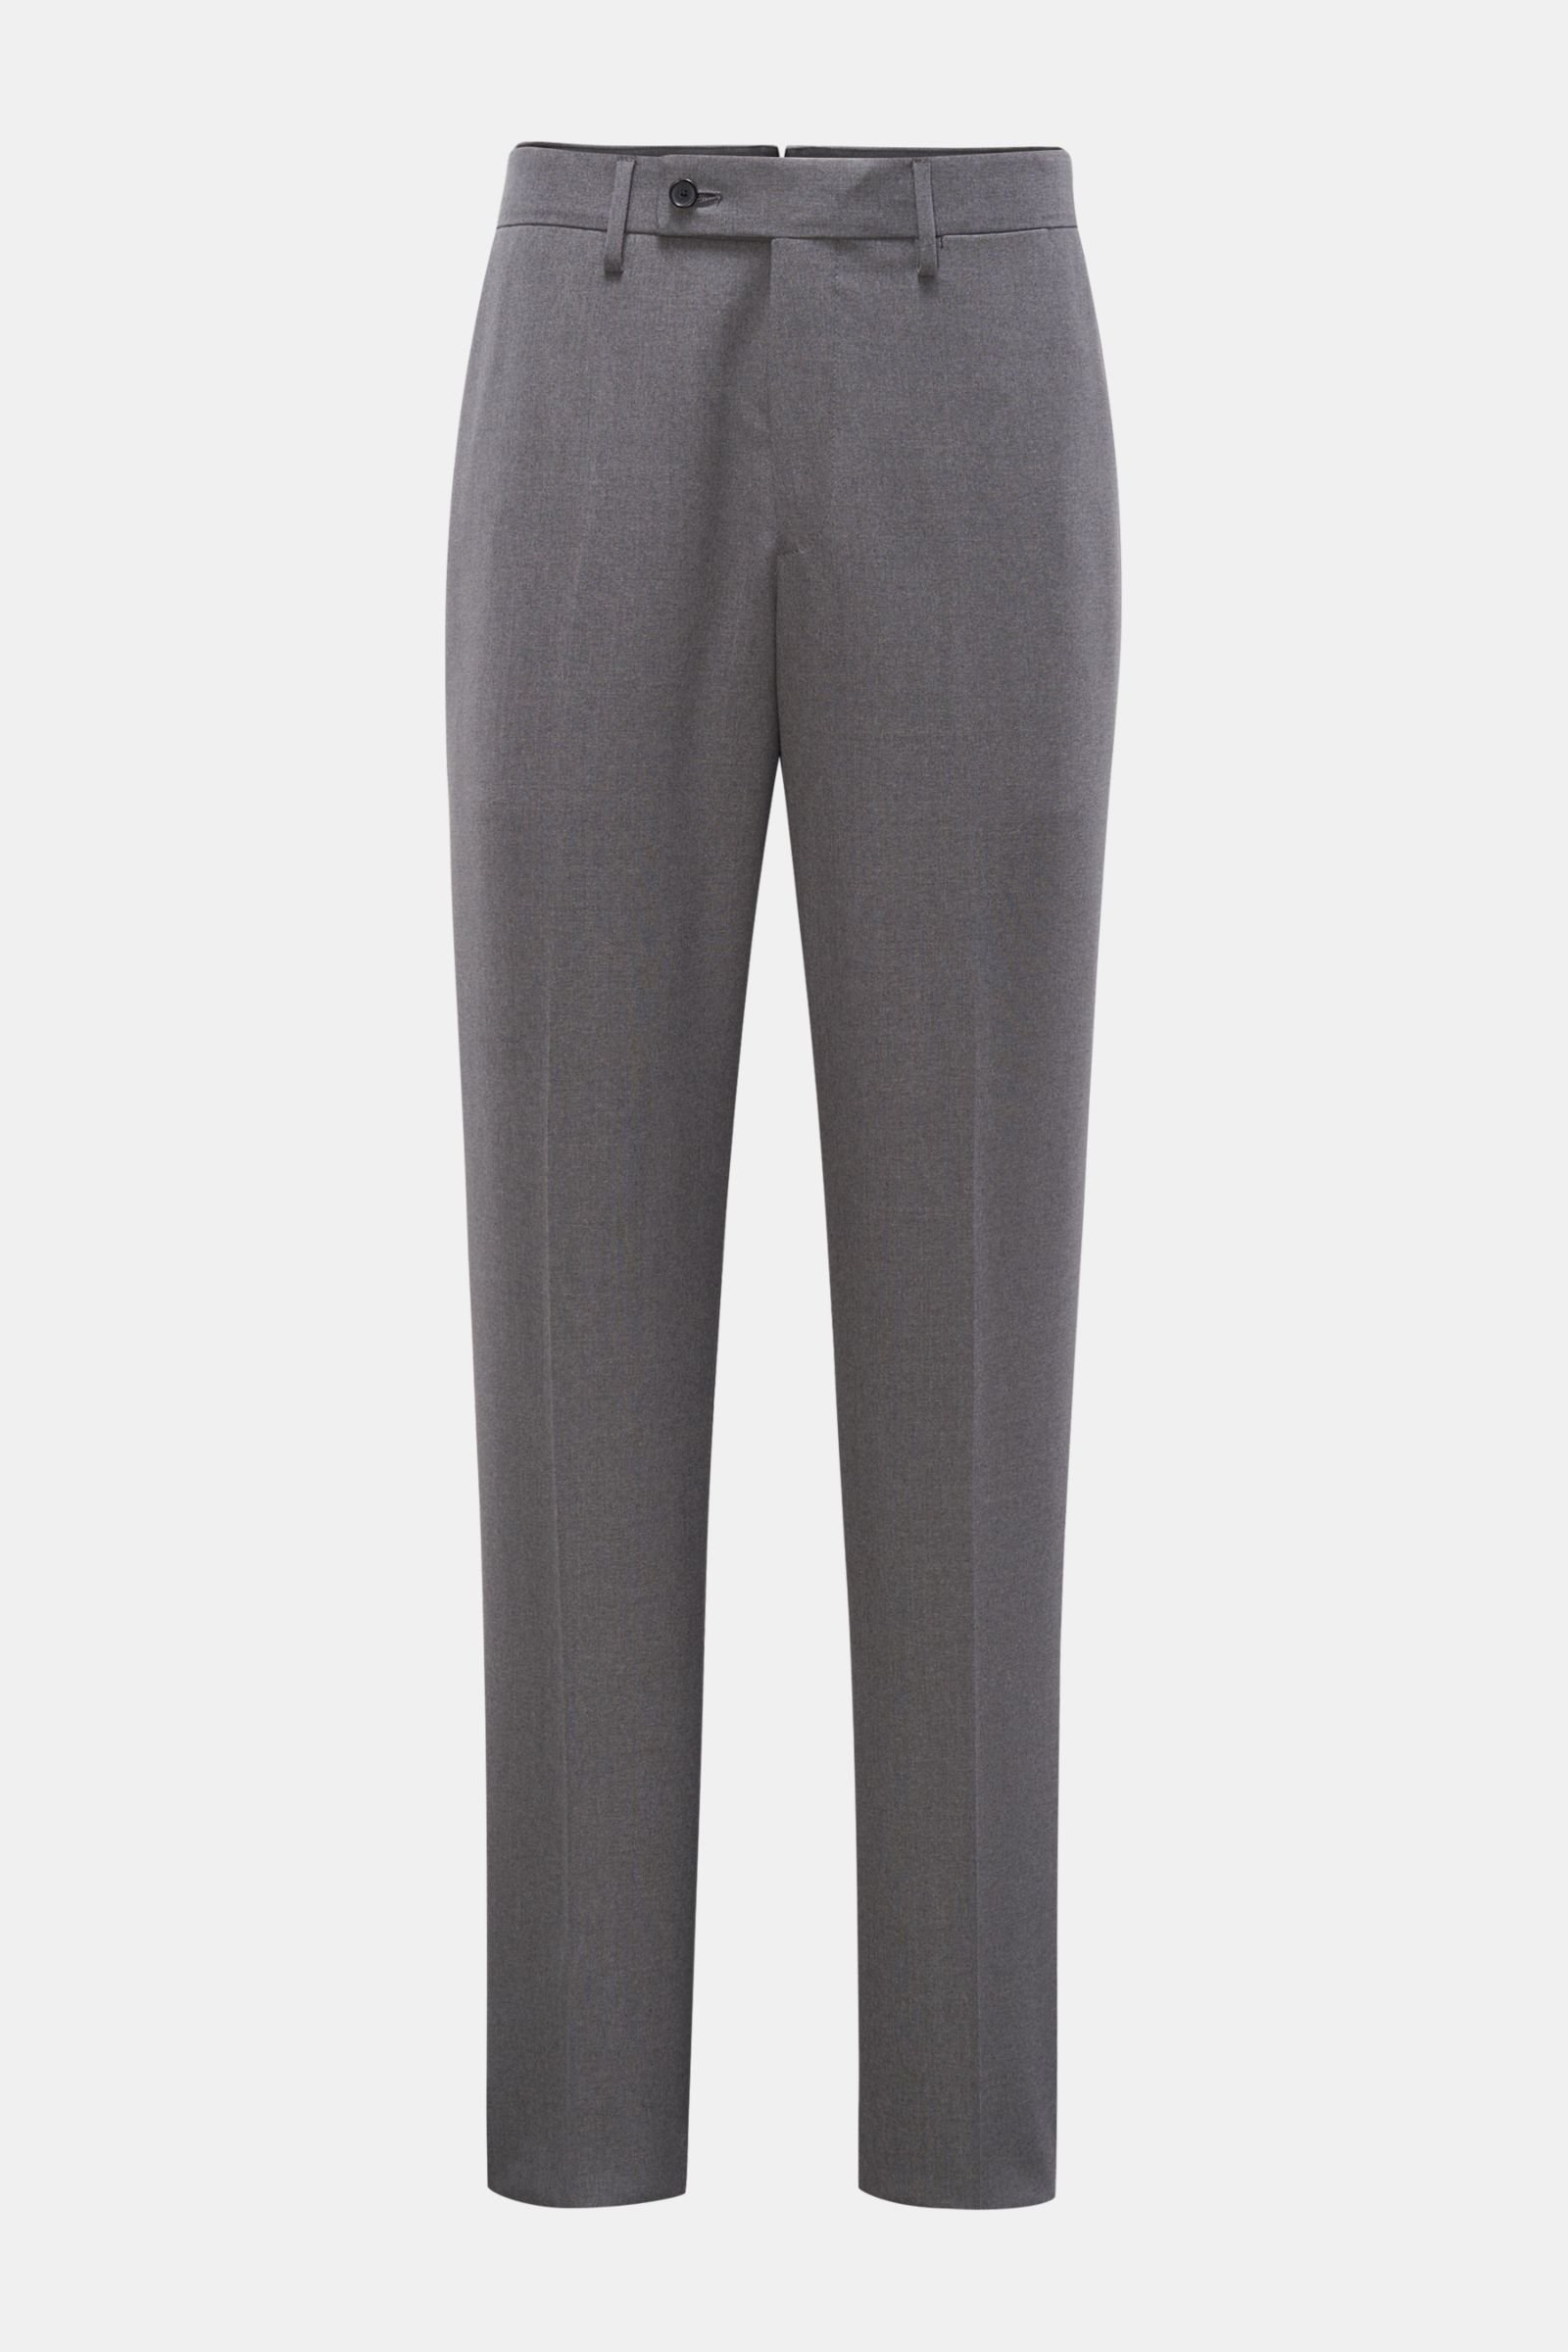 Wool trousers grey